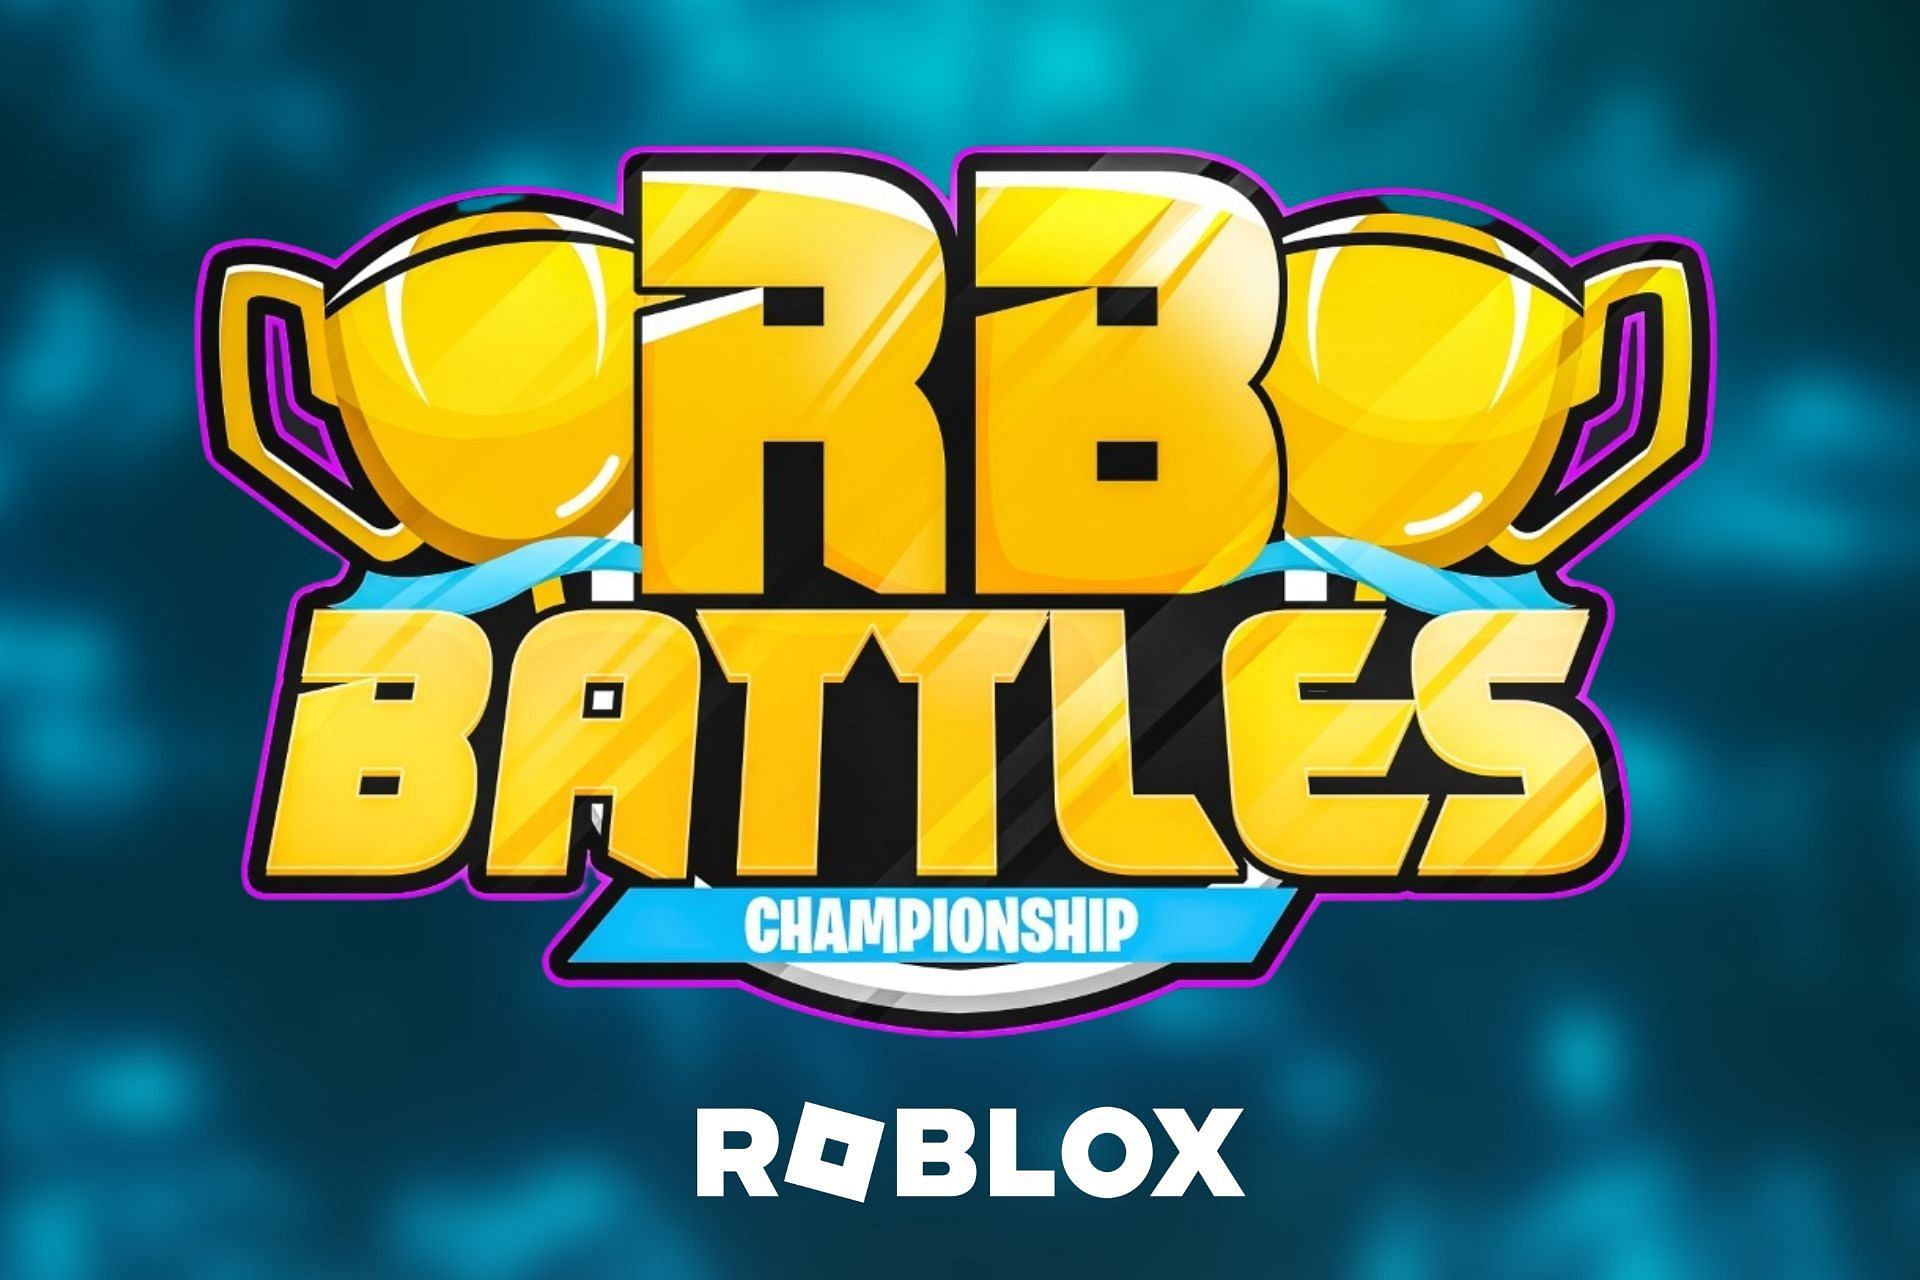 Roblox RB Battle season 3 is finally here